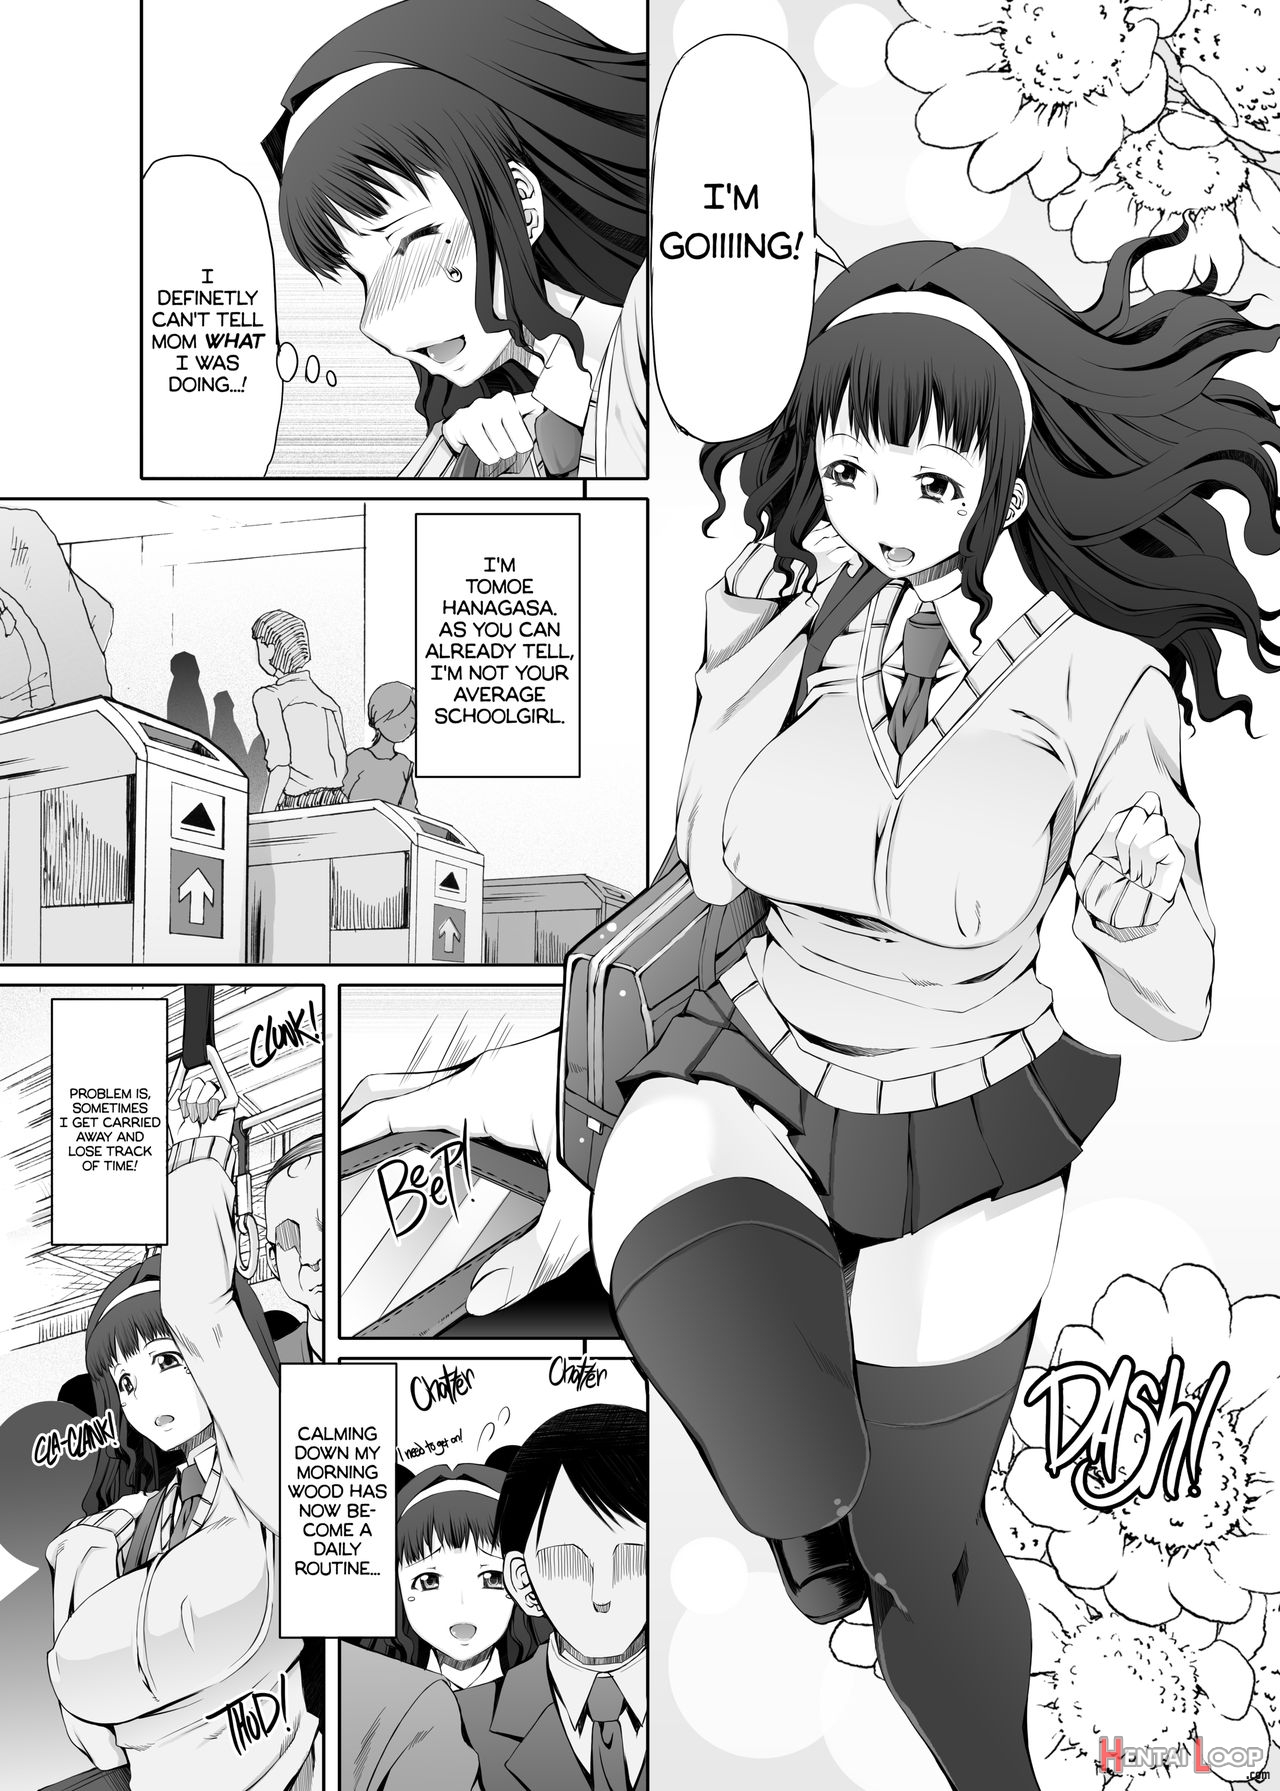 A Certain Futanari Girl's Masturbation Diary Ch.1 - Futaona Introduction Chapter page 5